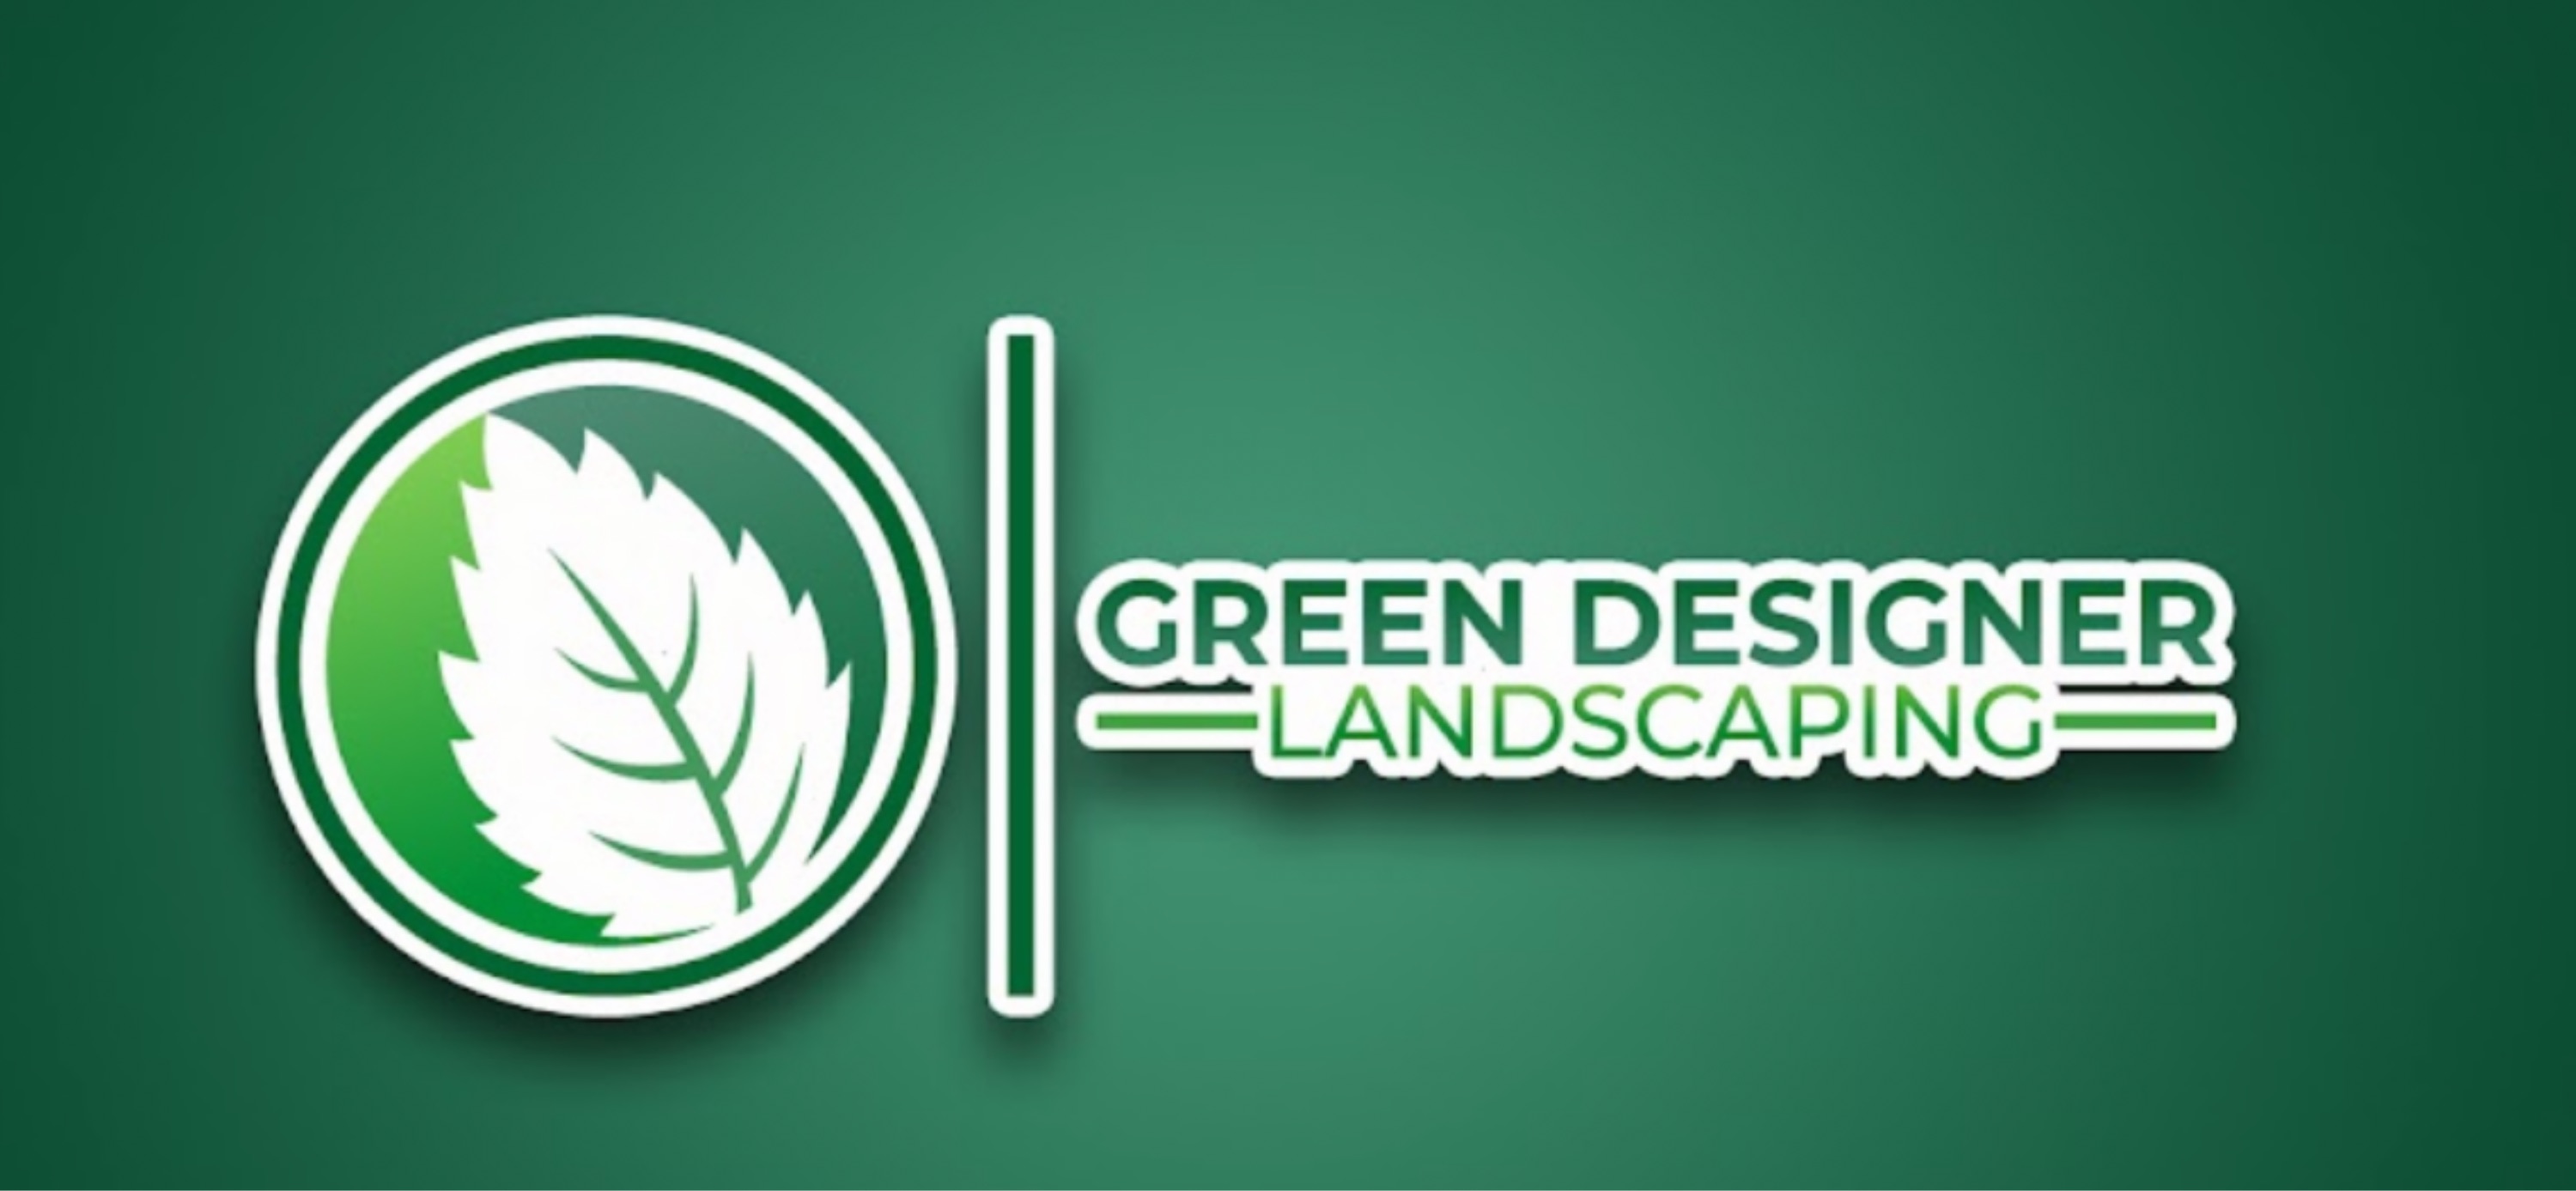 Green Designers Landscaping Logo